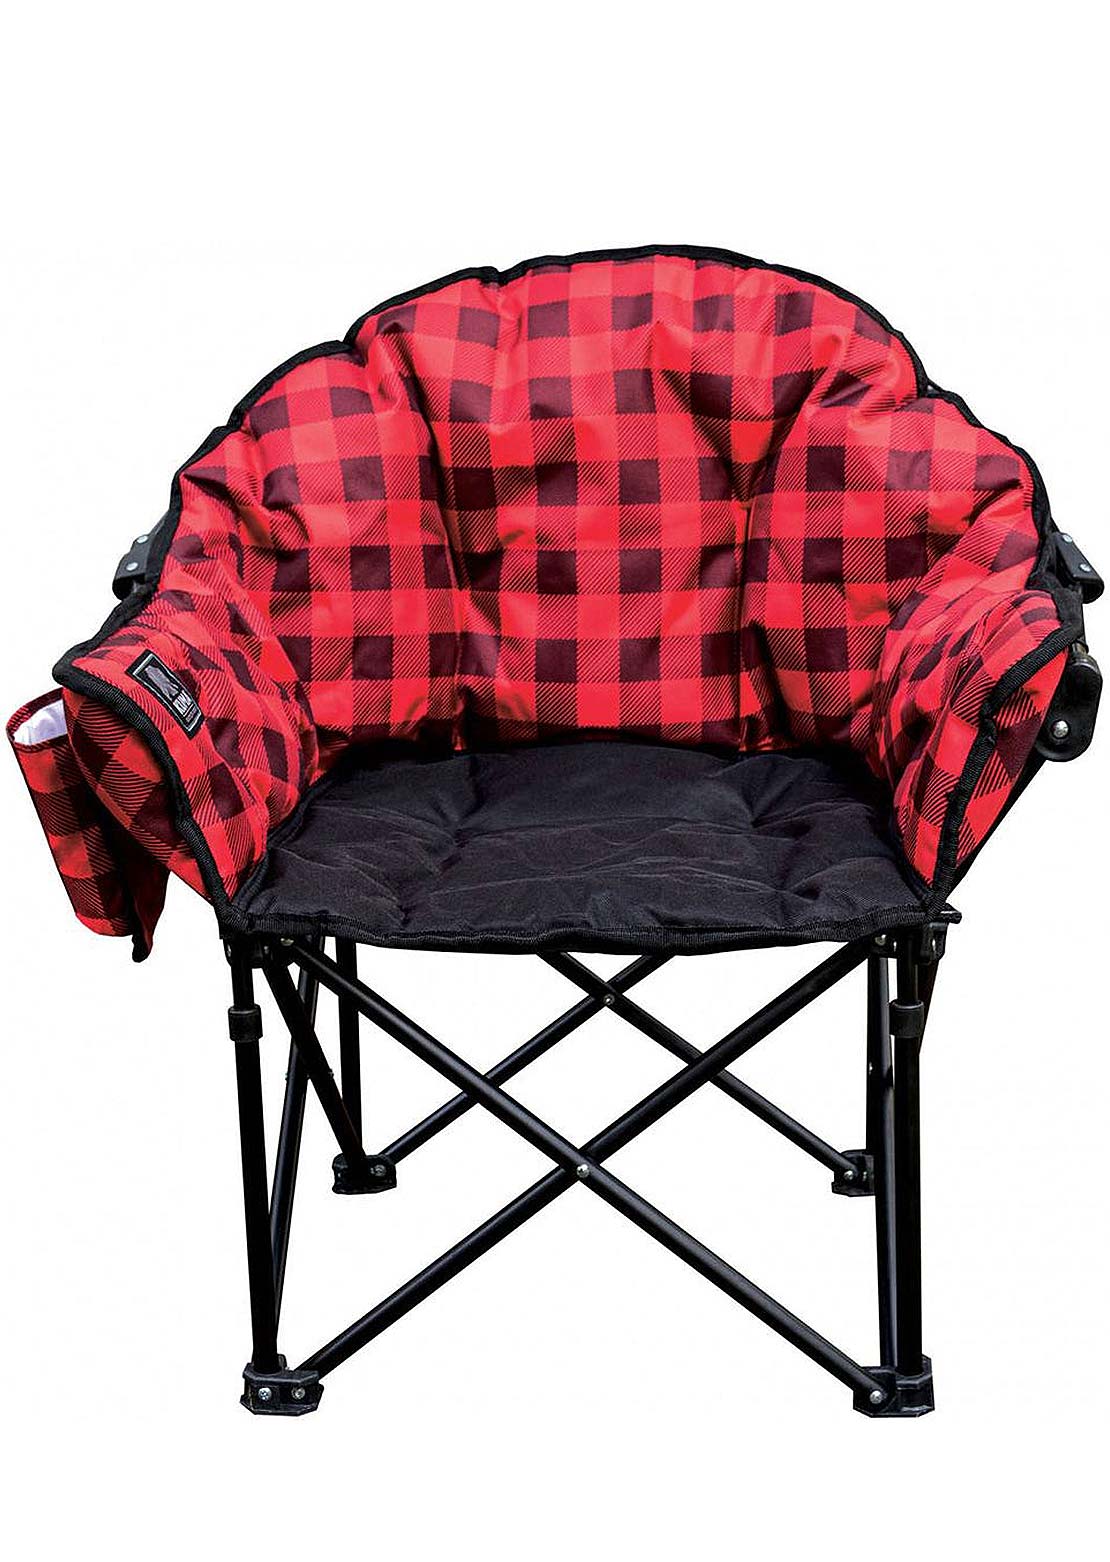 Kuma Outdoor Gear Junior Lazy Bear Chair Red/Black